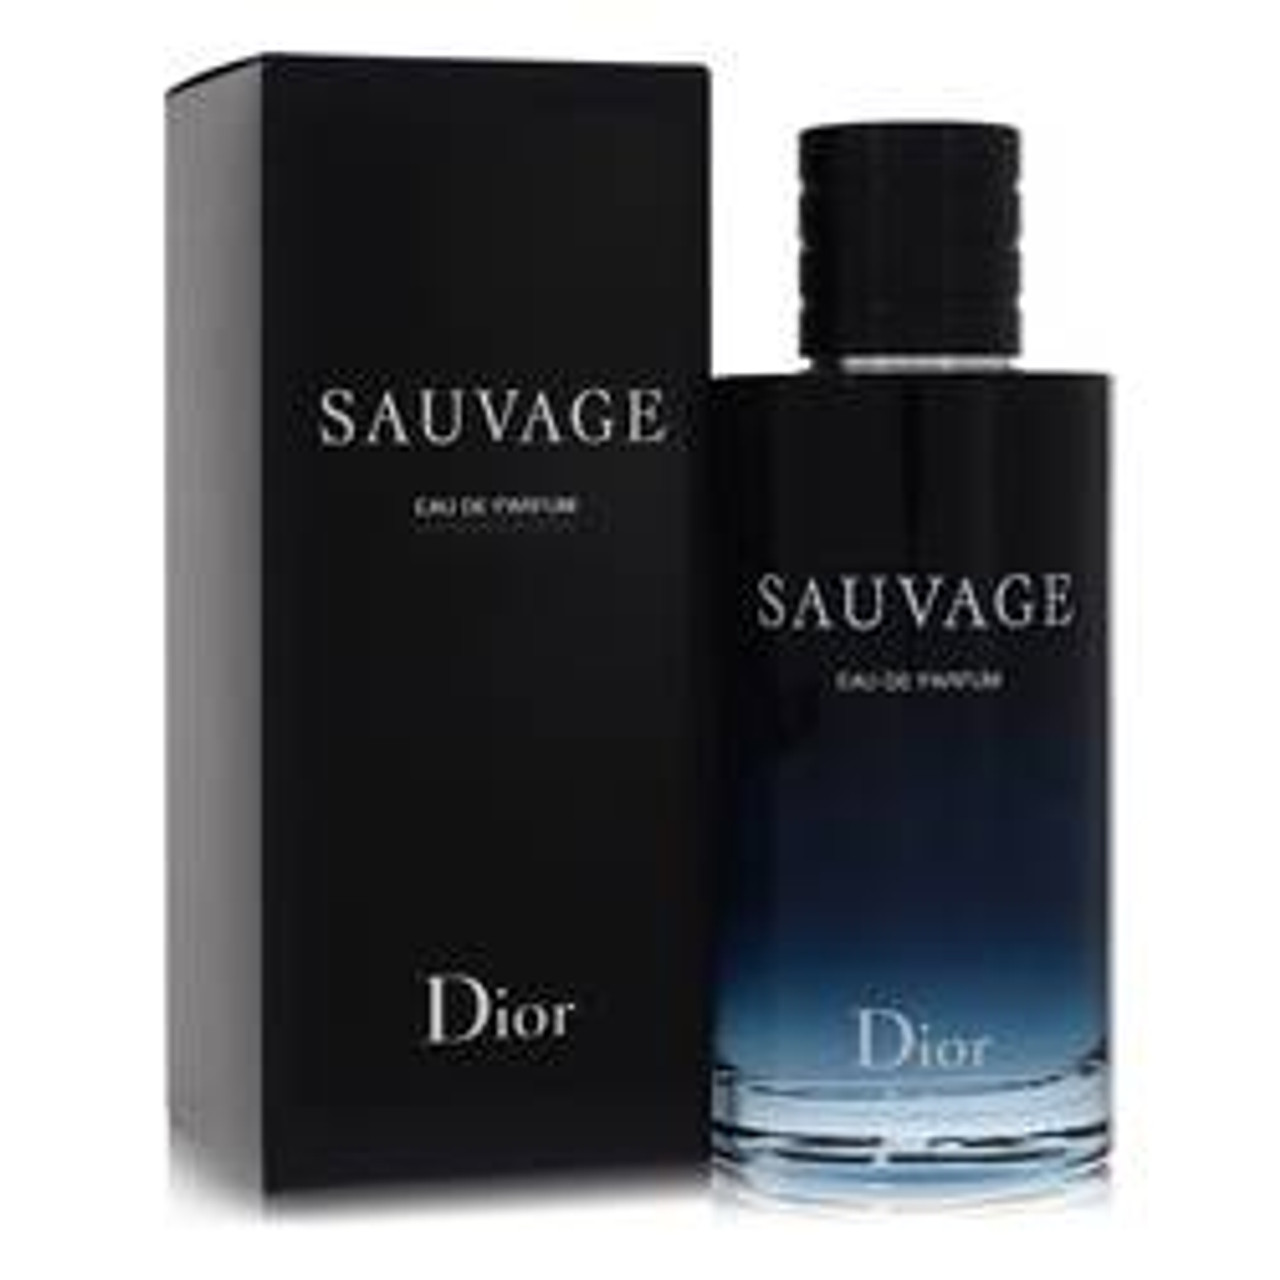 Sauvage Cologne By Christian Dior Eau De Parfum Spray 6.8 oz for Men - *Pre-Order